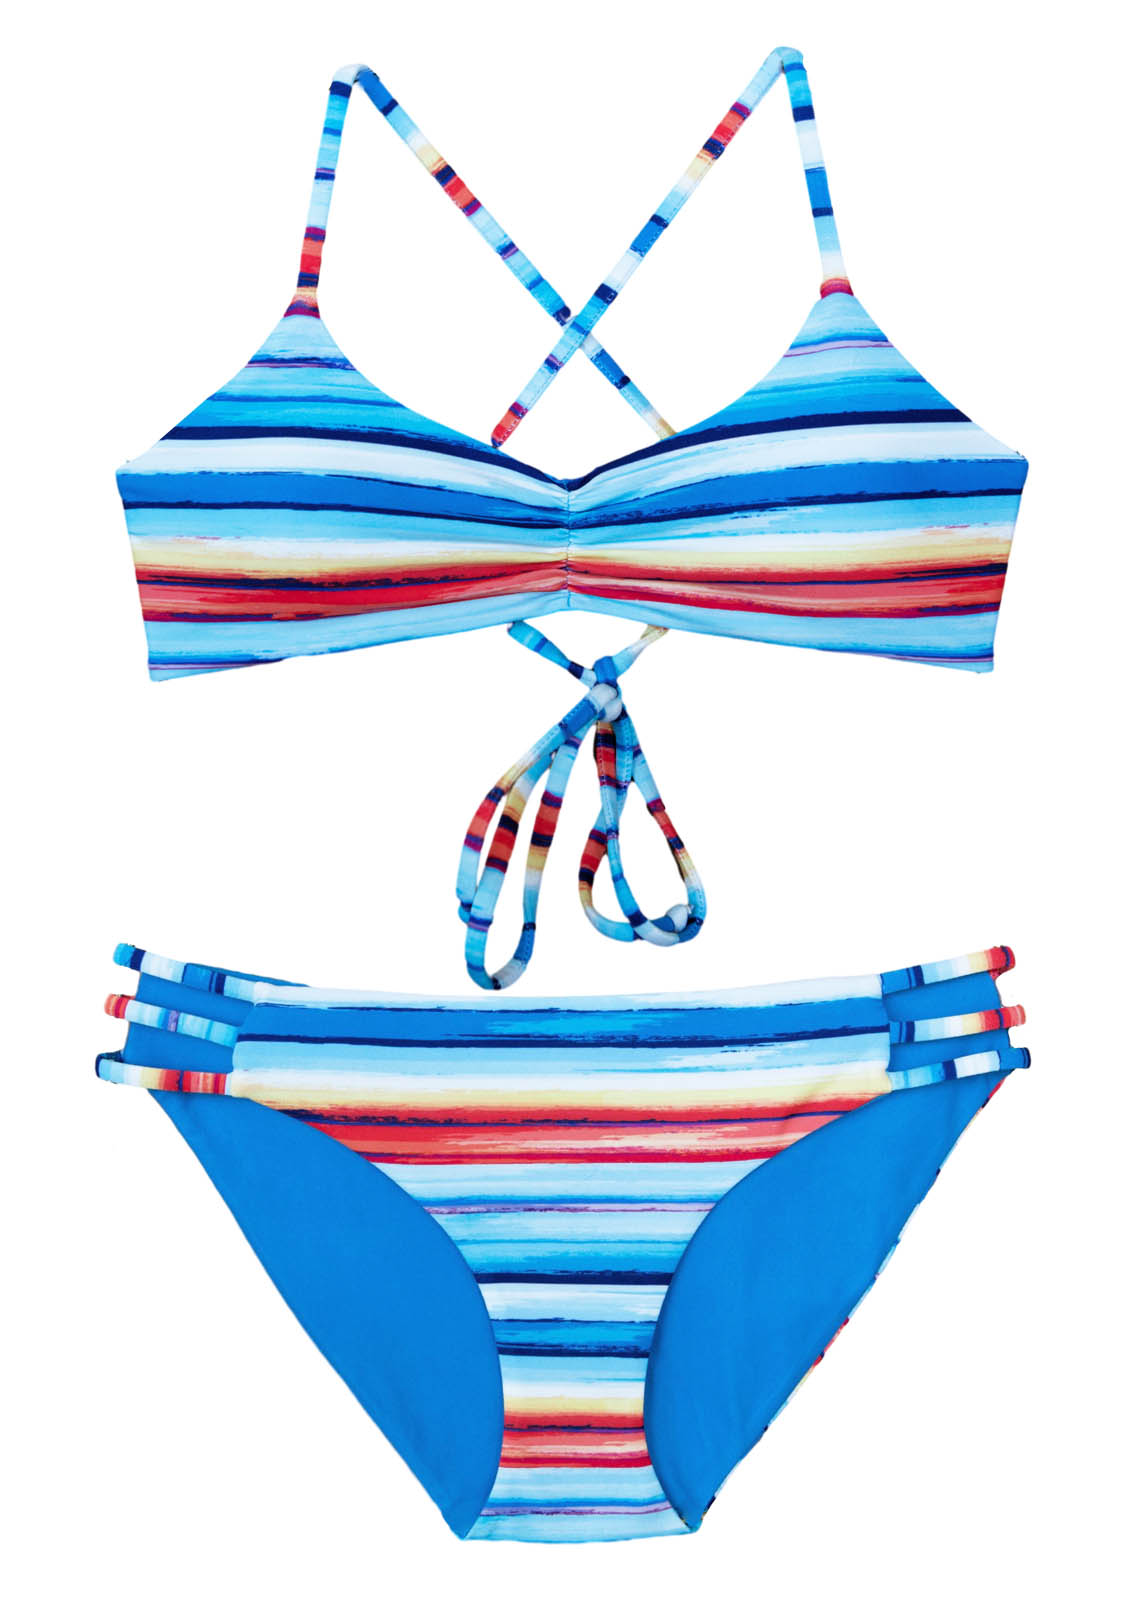 Reversible two-piece Bikini striped blue-orange-yellow-white-black for girls sizing 10, 12, 14, 16 and 18